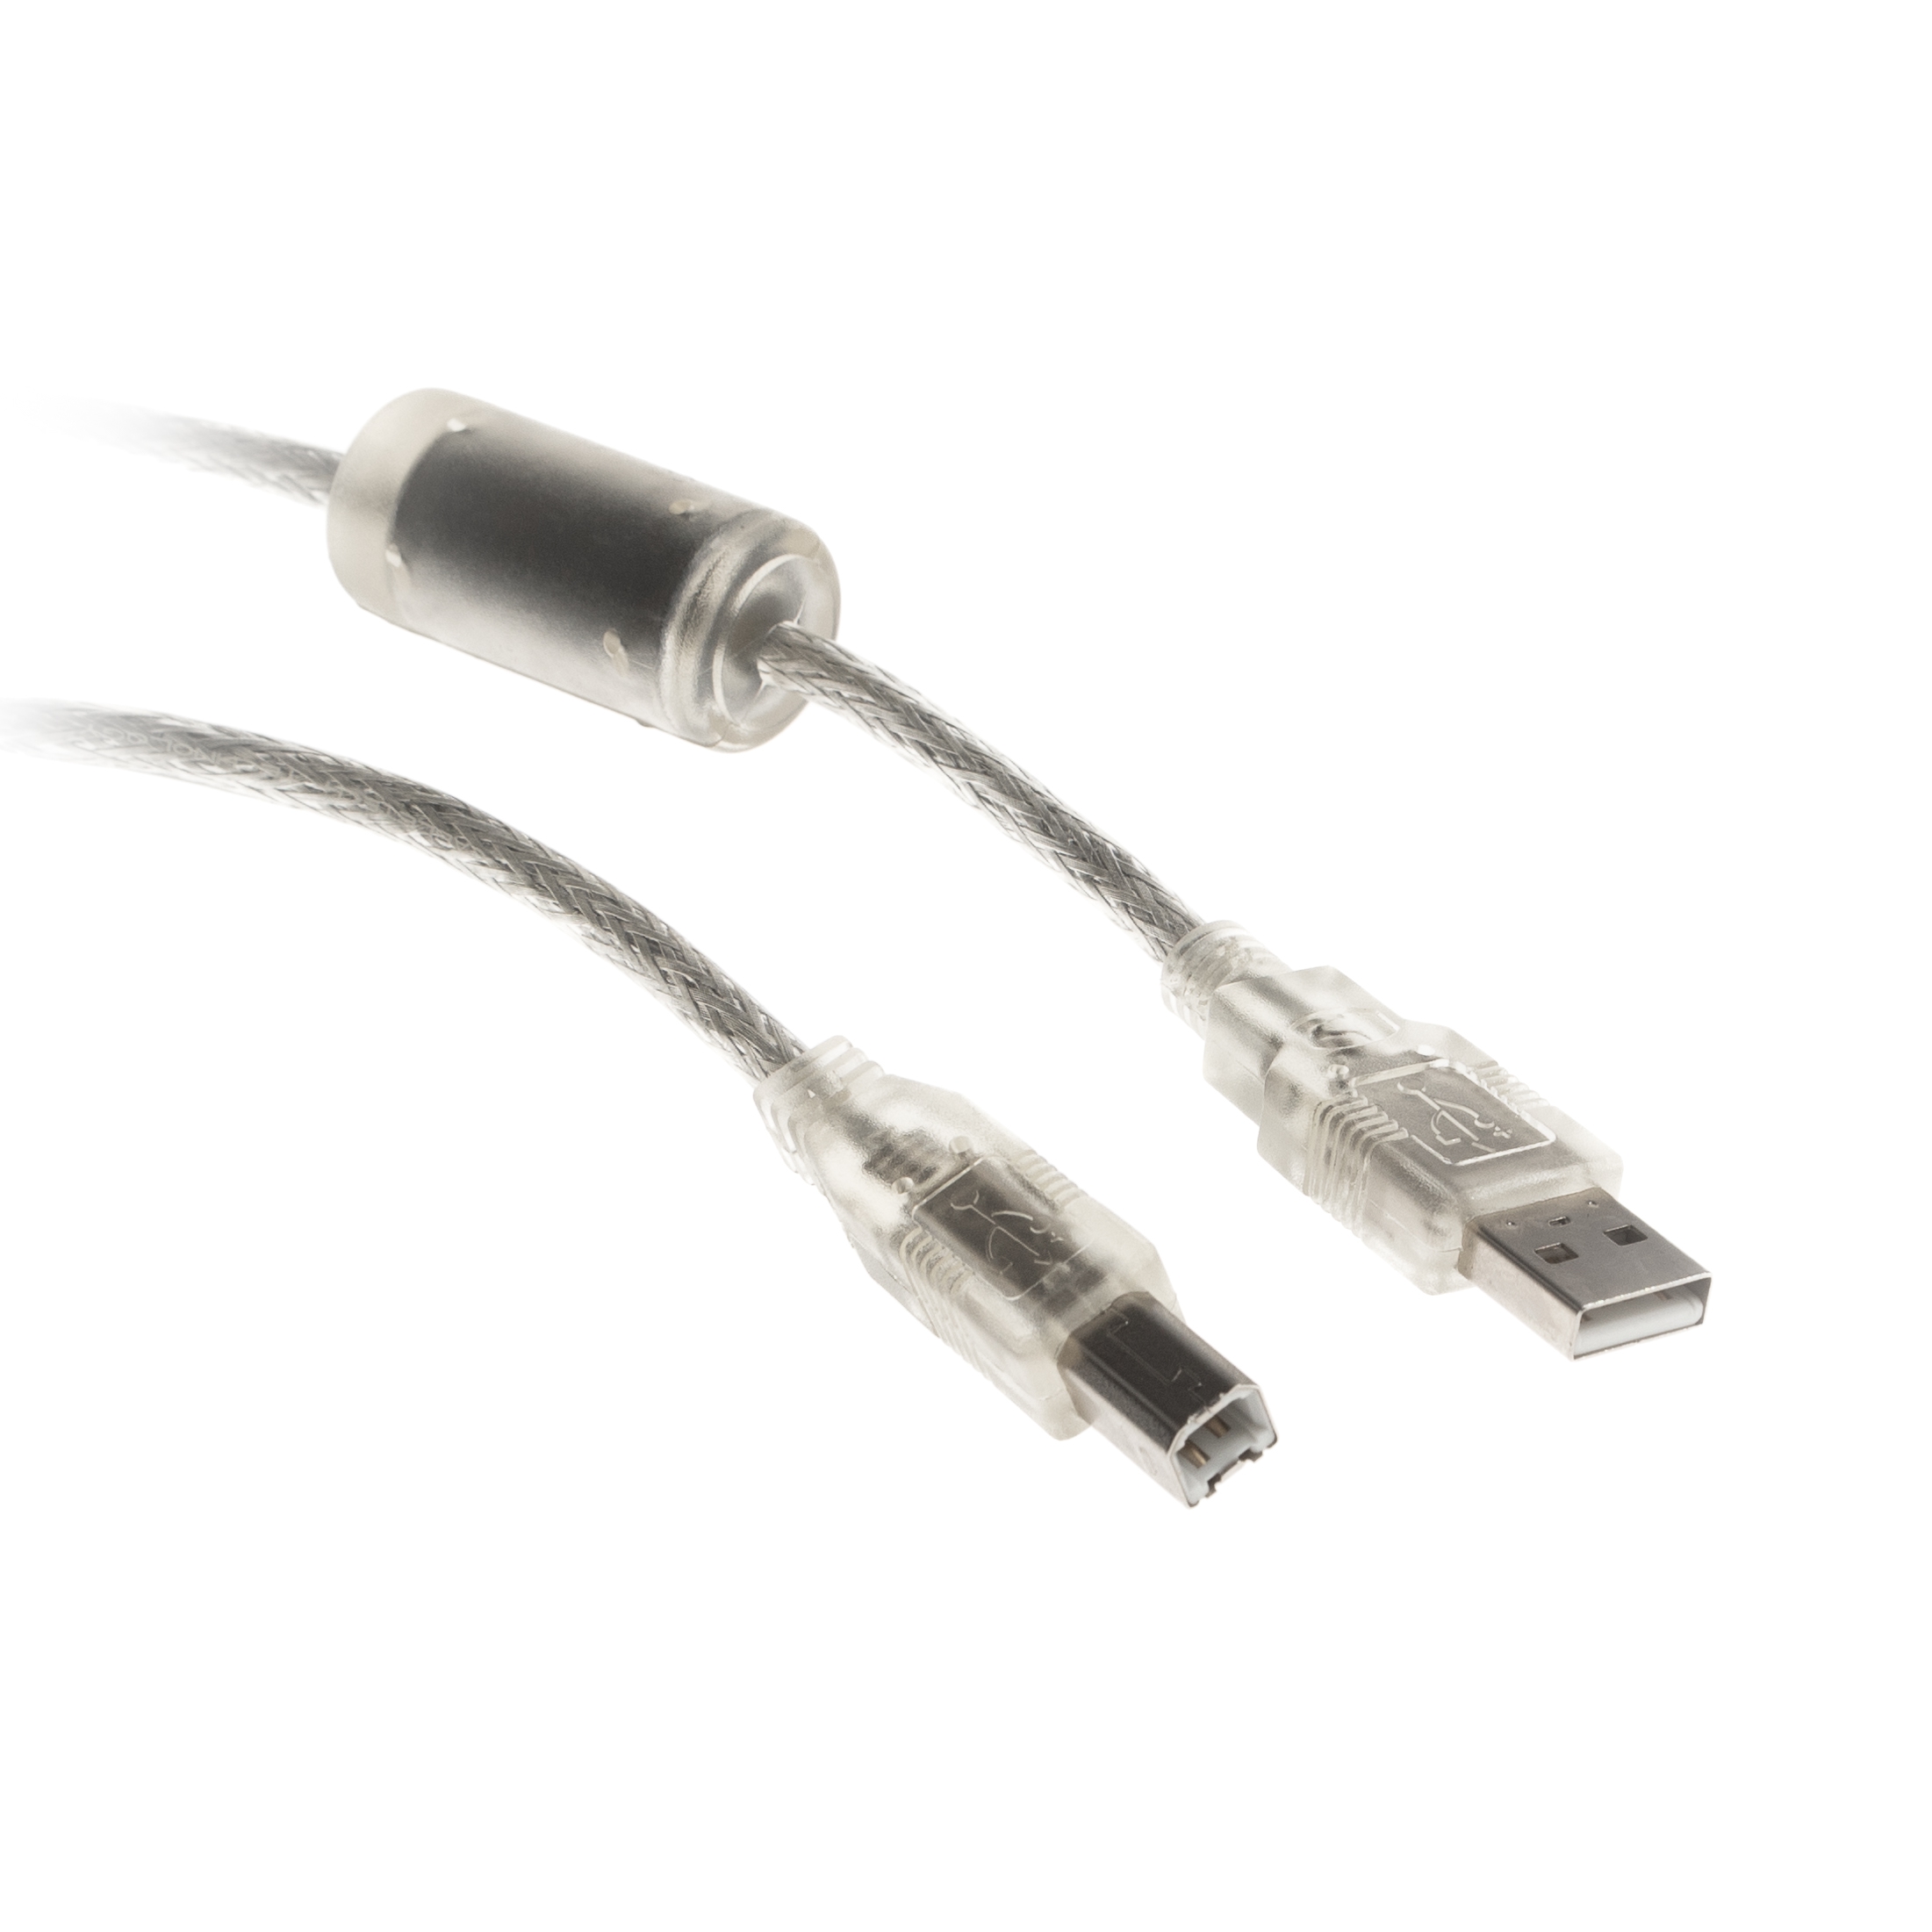 USB 2.0 cable with 1 big ferrite core PREMIUM quality 5m